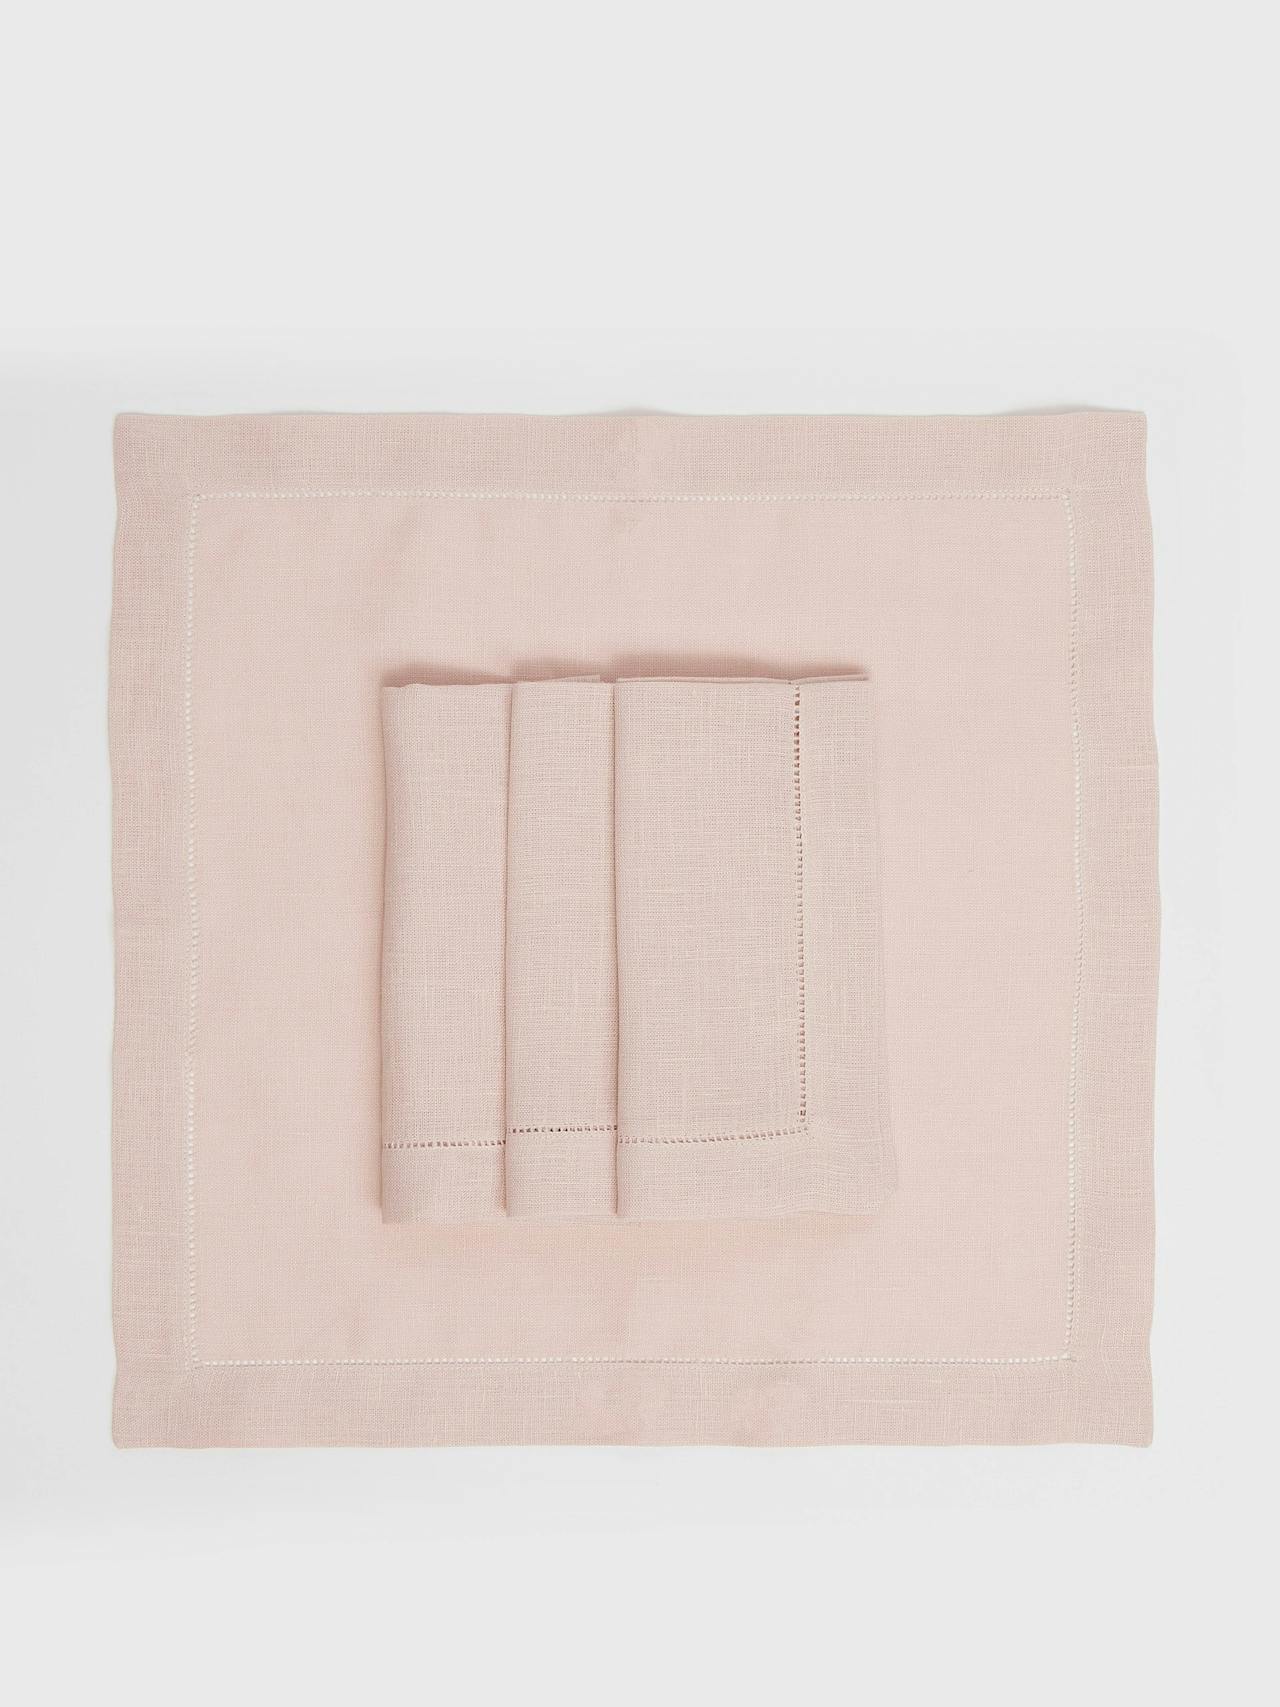 Dusty pink hemstitch napkins, set of 4